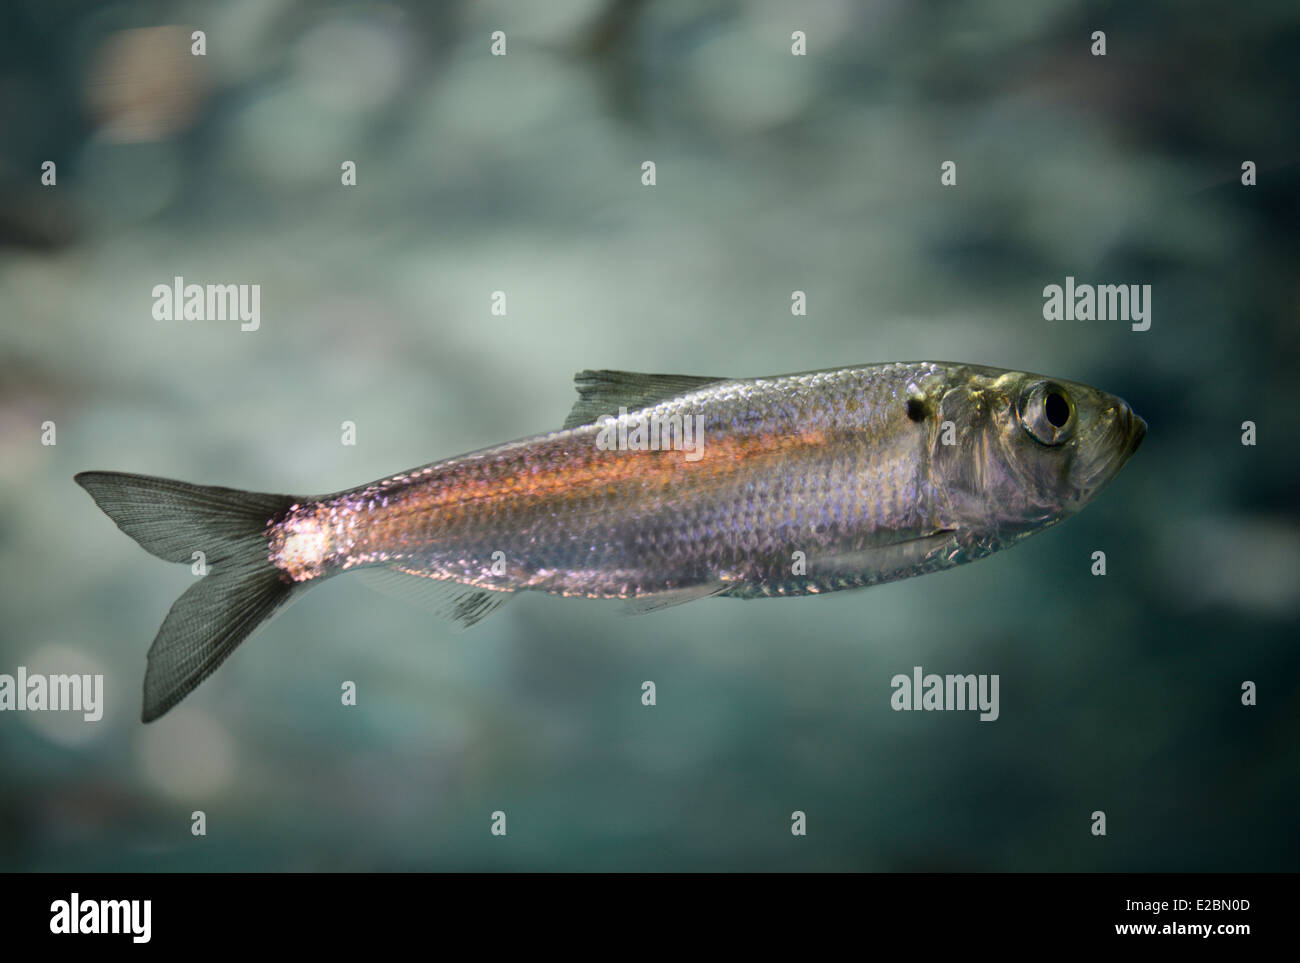 Single swimming juvenile Alewife herring fish inRipleys Aquarium Toronto Stock Photo